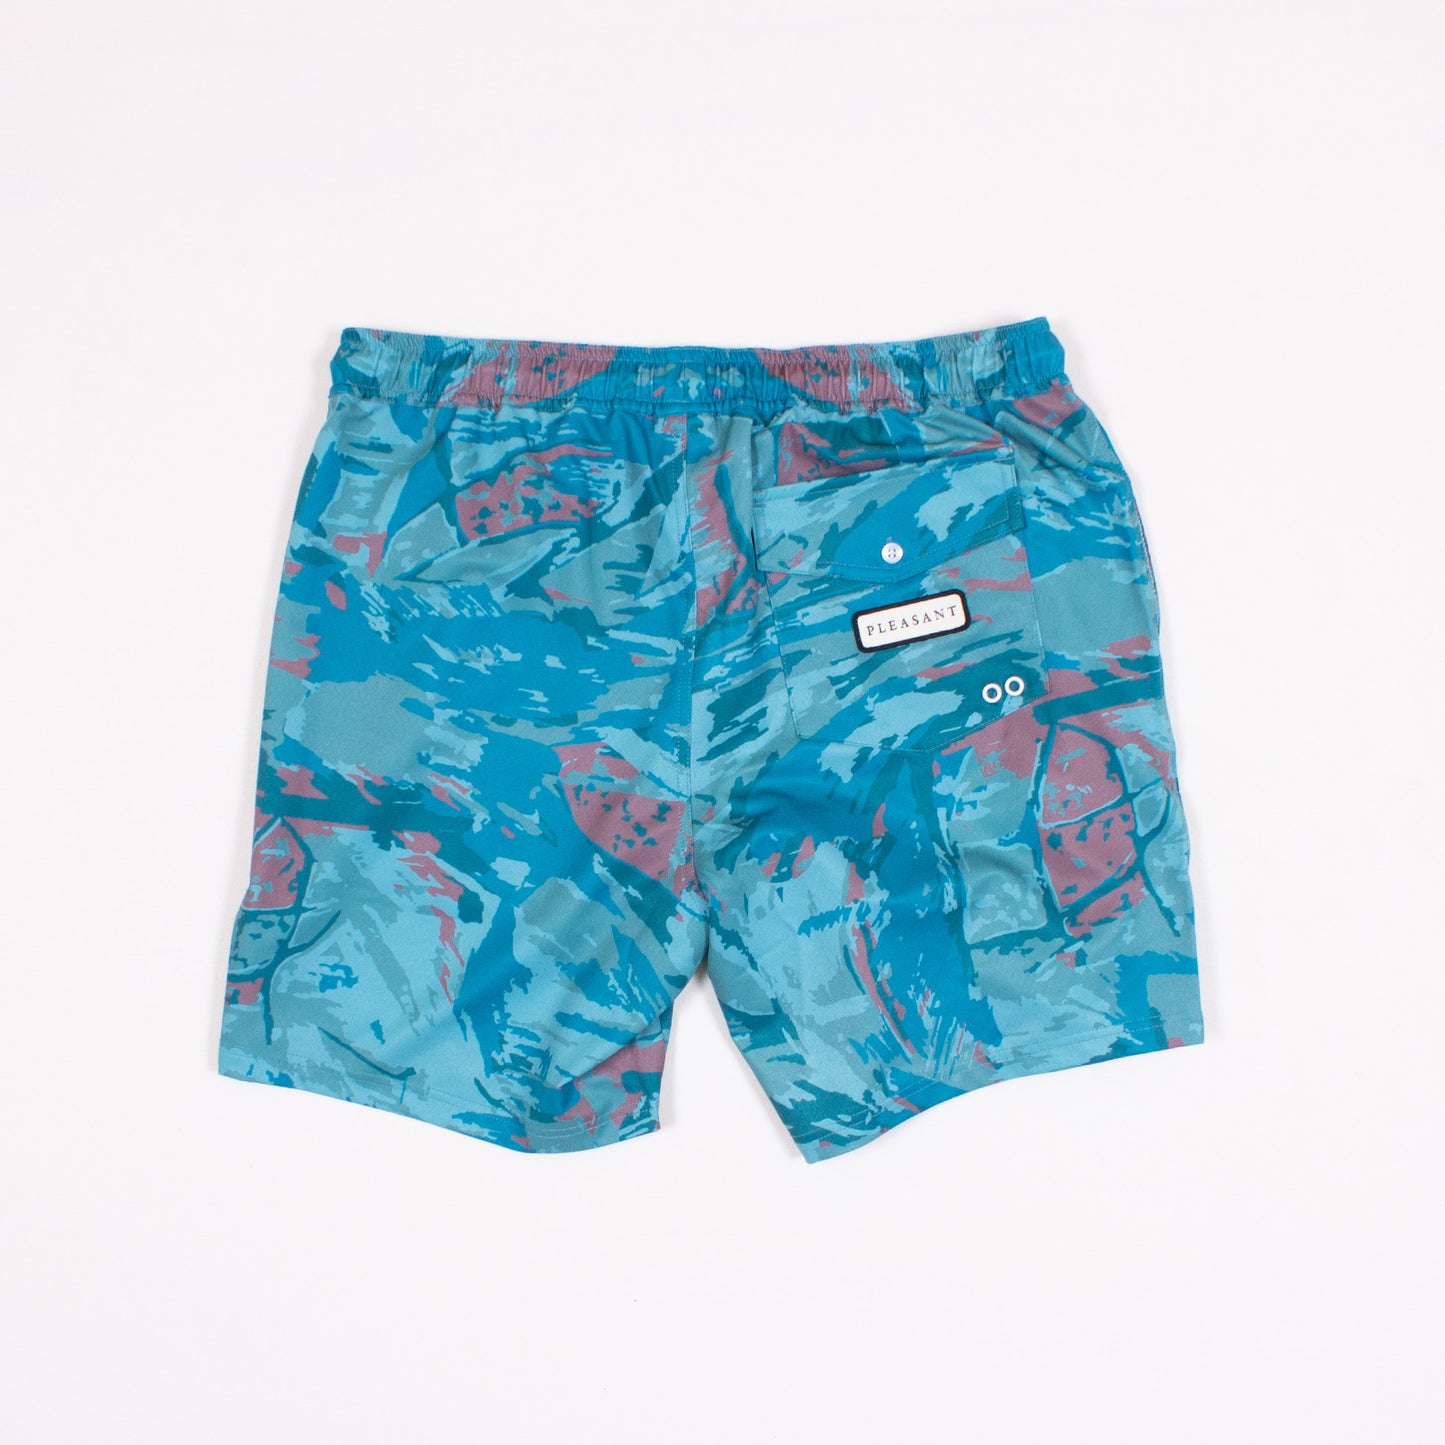 Nordic sunset swim shorts